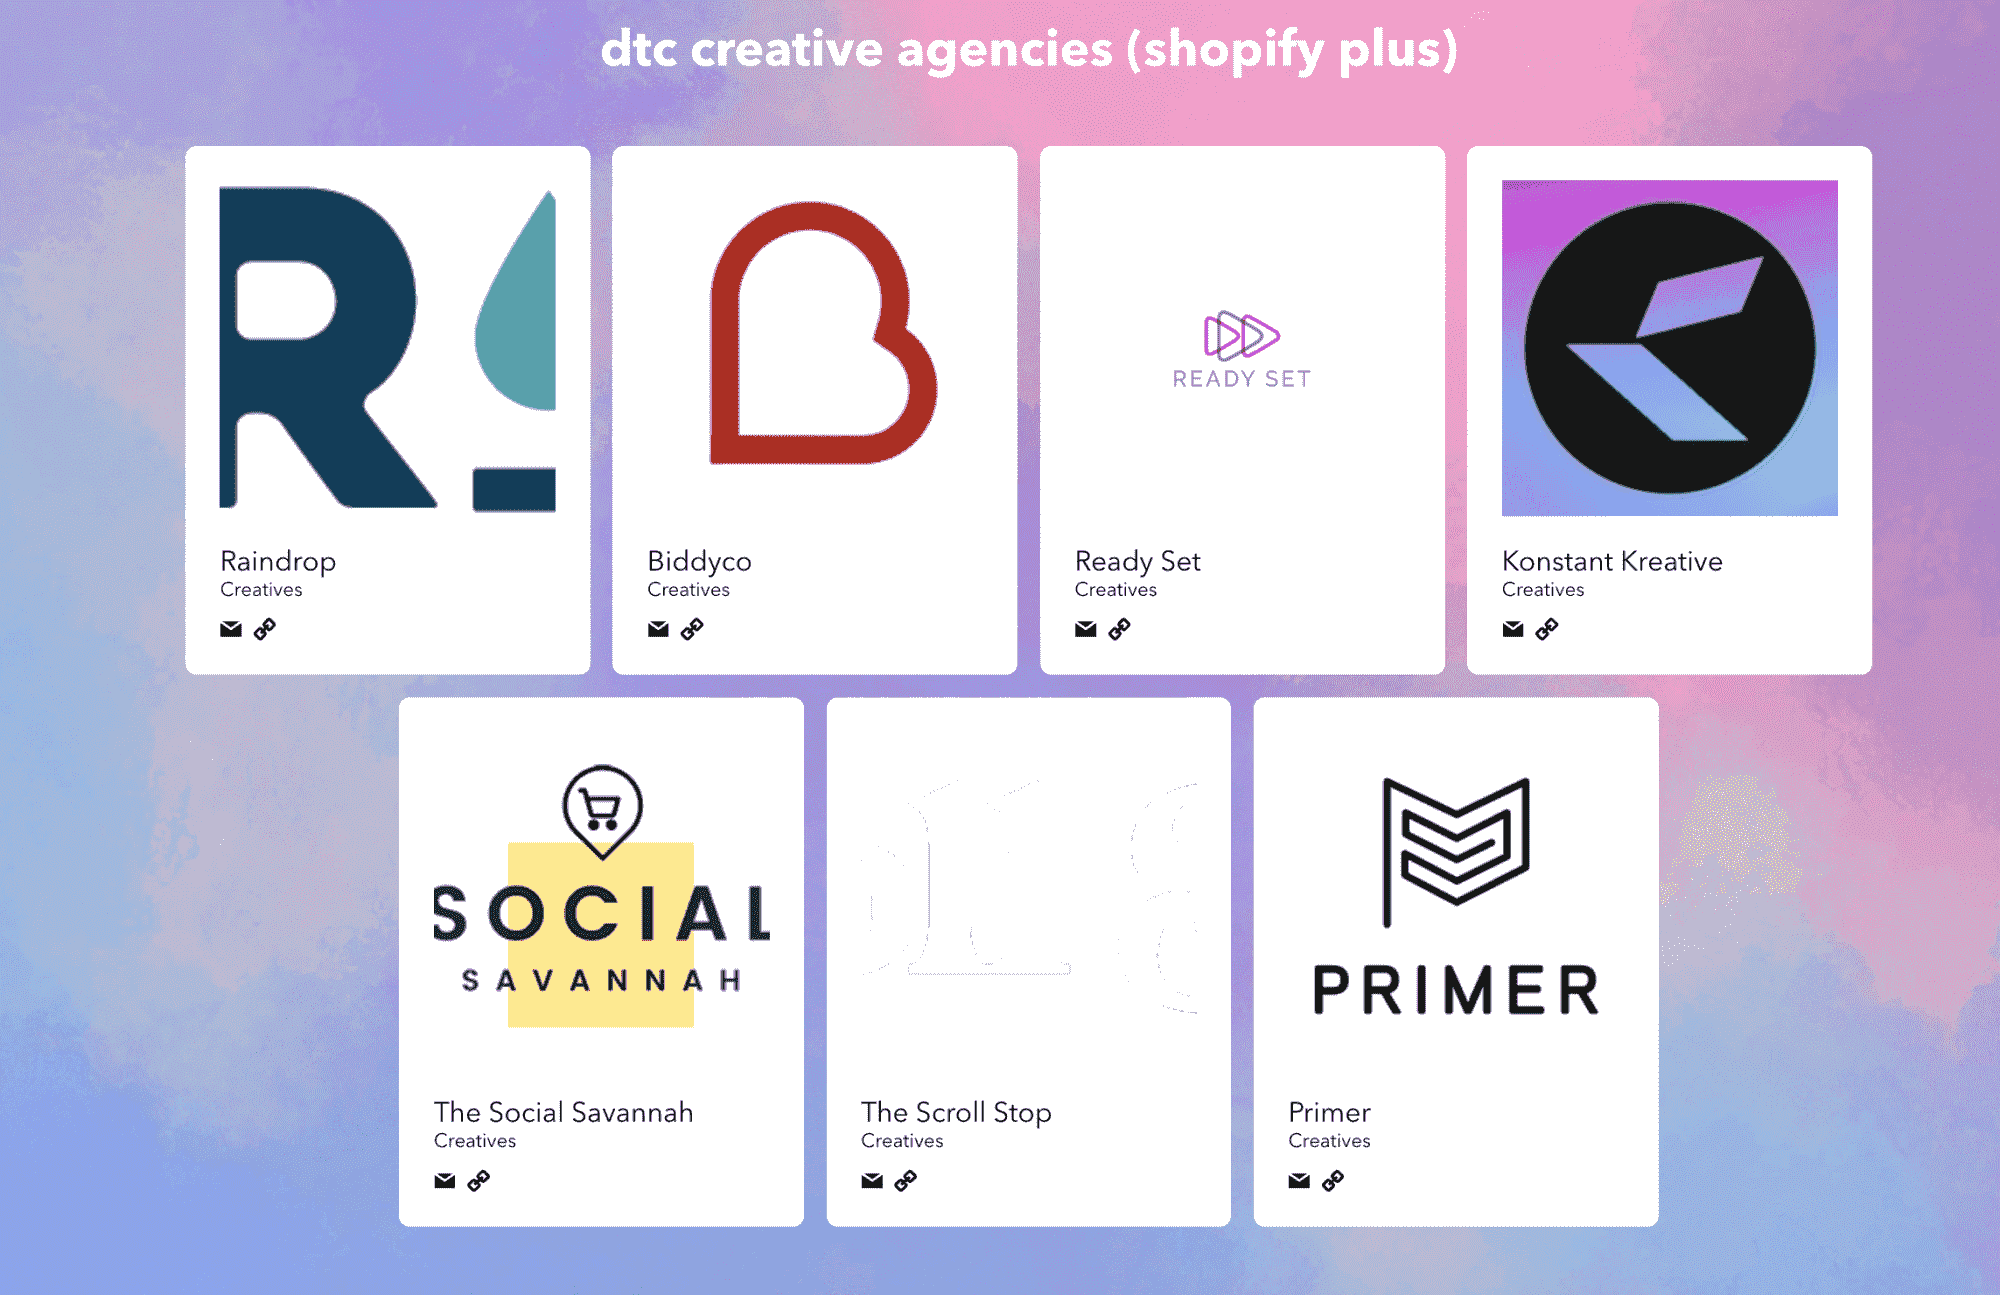 dtc creative agencies (shopify plus)